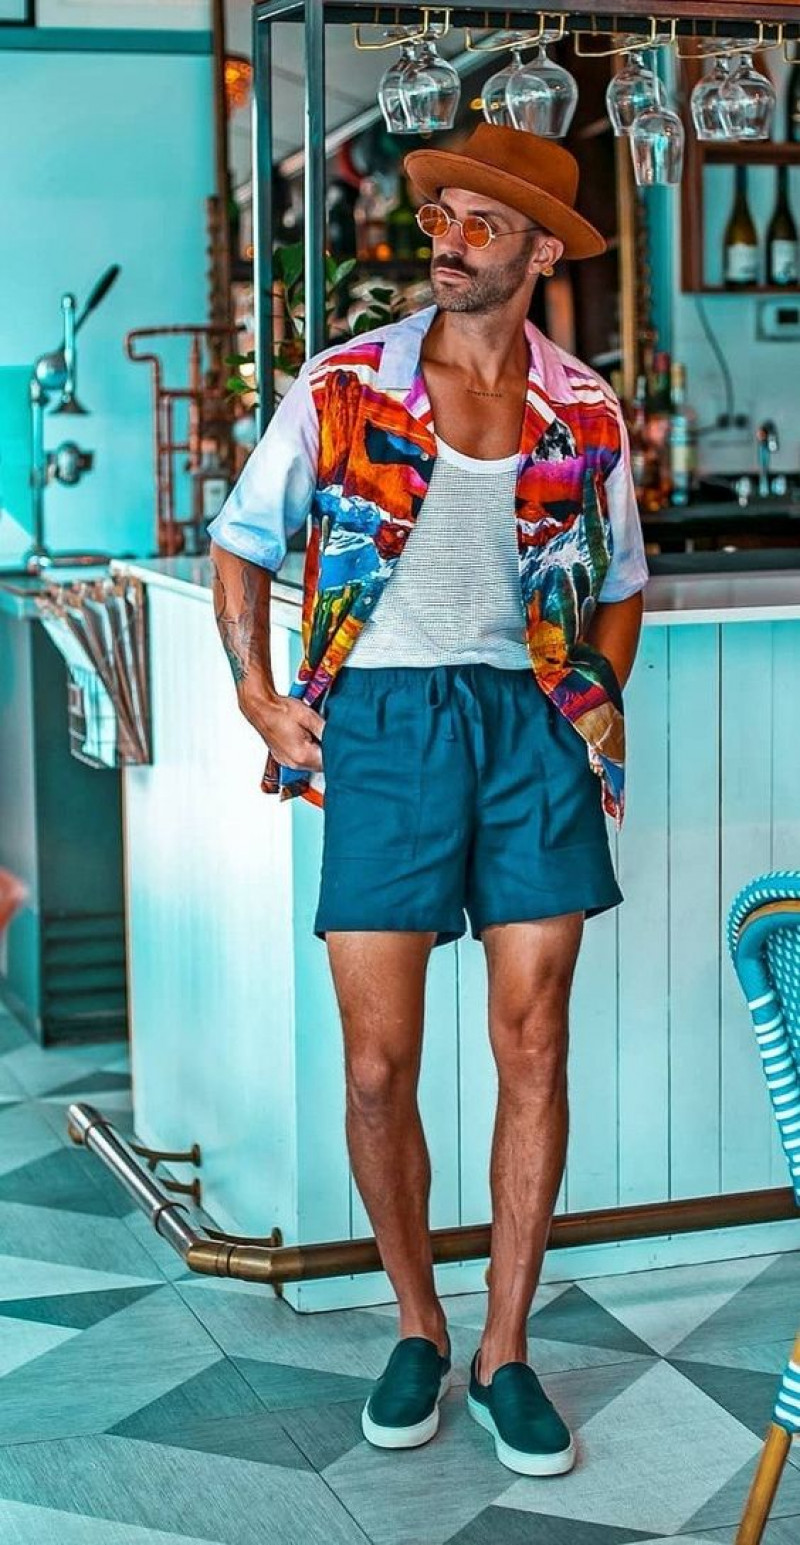 Men's Beach Outfit Ideas